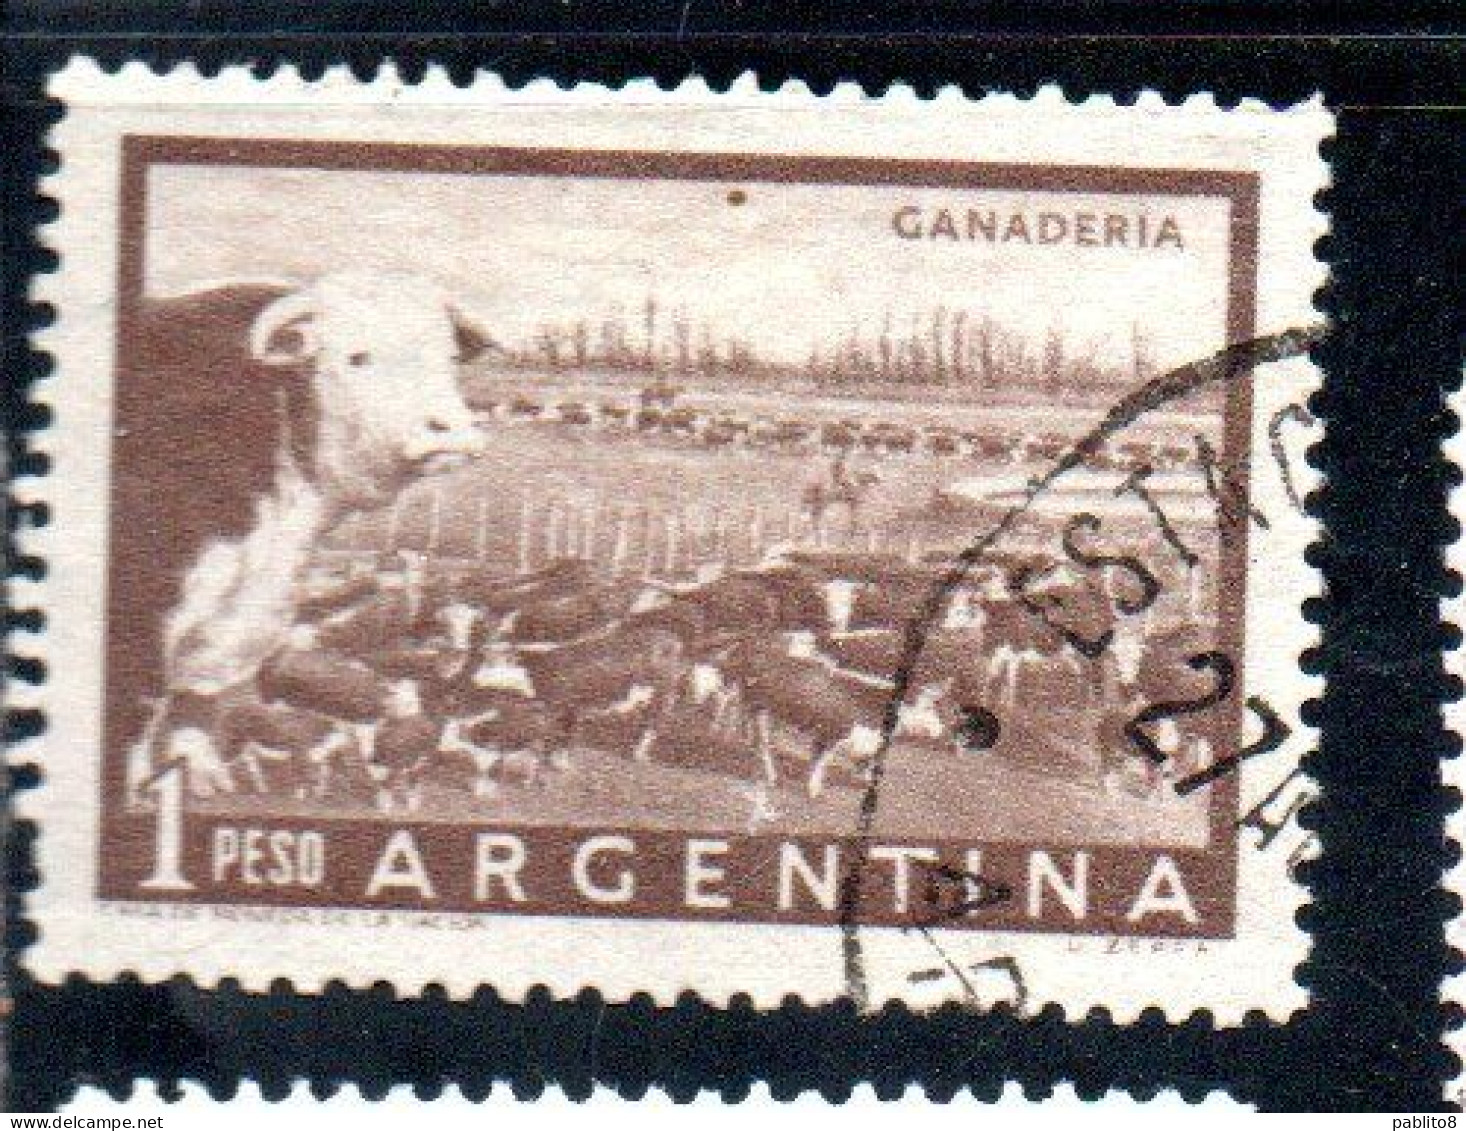 ARGENTINA 1954 1959 1958 CATTLE RANCH GANADERIA 1p USED USADO OBLITERE' - Oblitérés